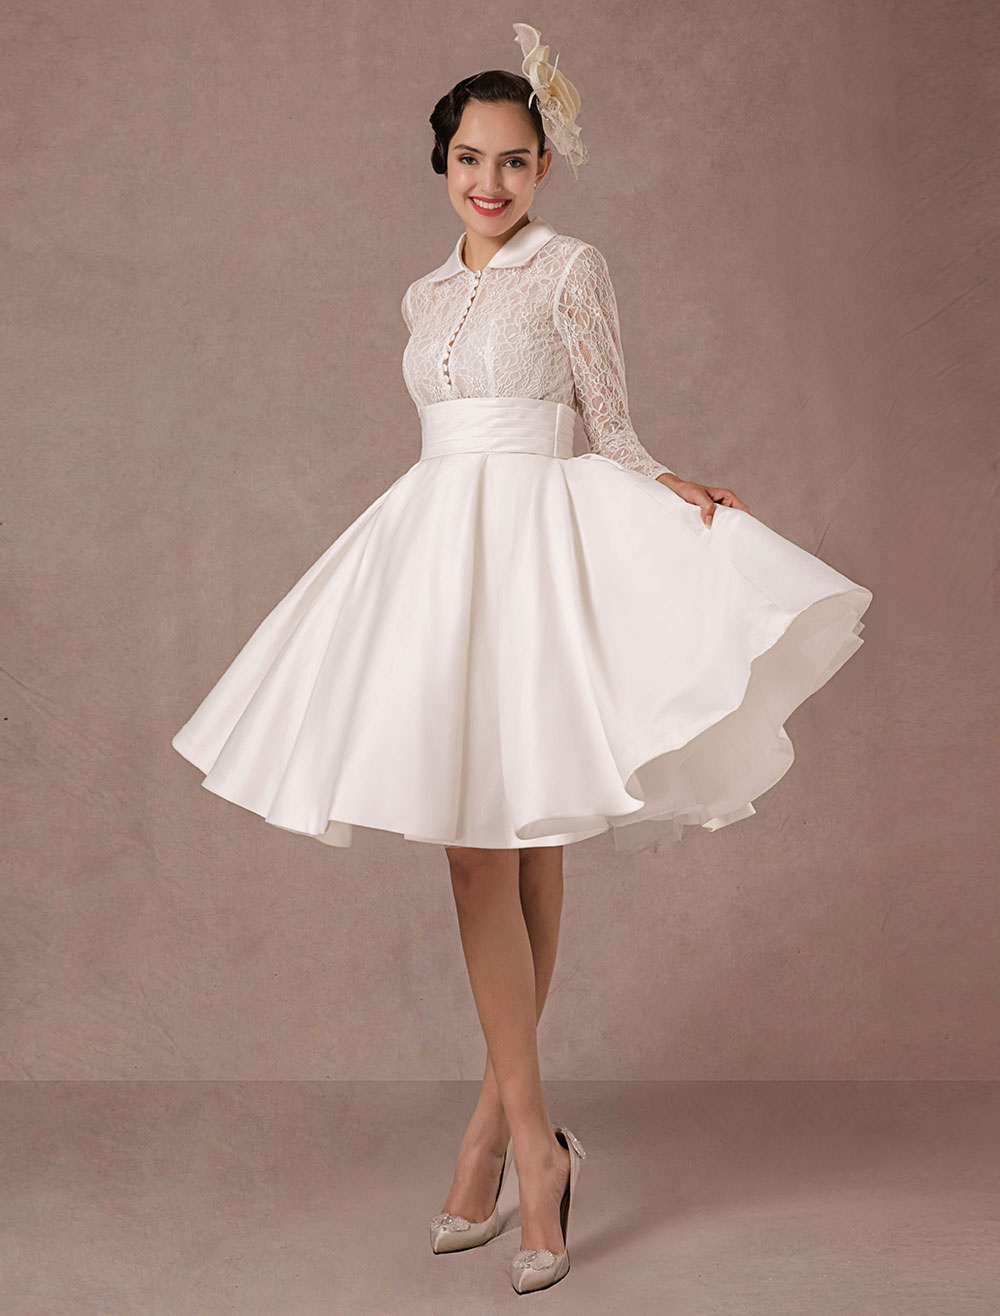 Vintage Wedding Dress Long Lace Sleeves Satin Bridal Gown Short Knee Length Summer Wedding Dresses 2020 Milanoo